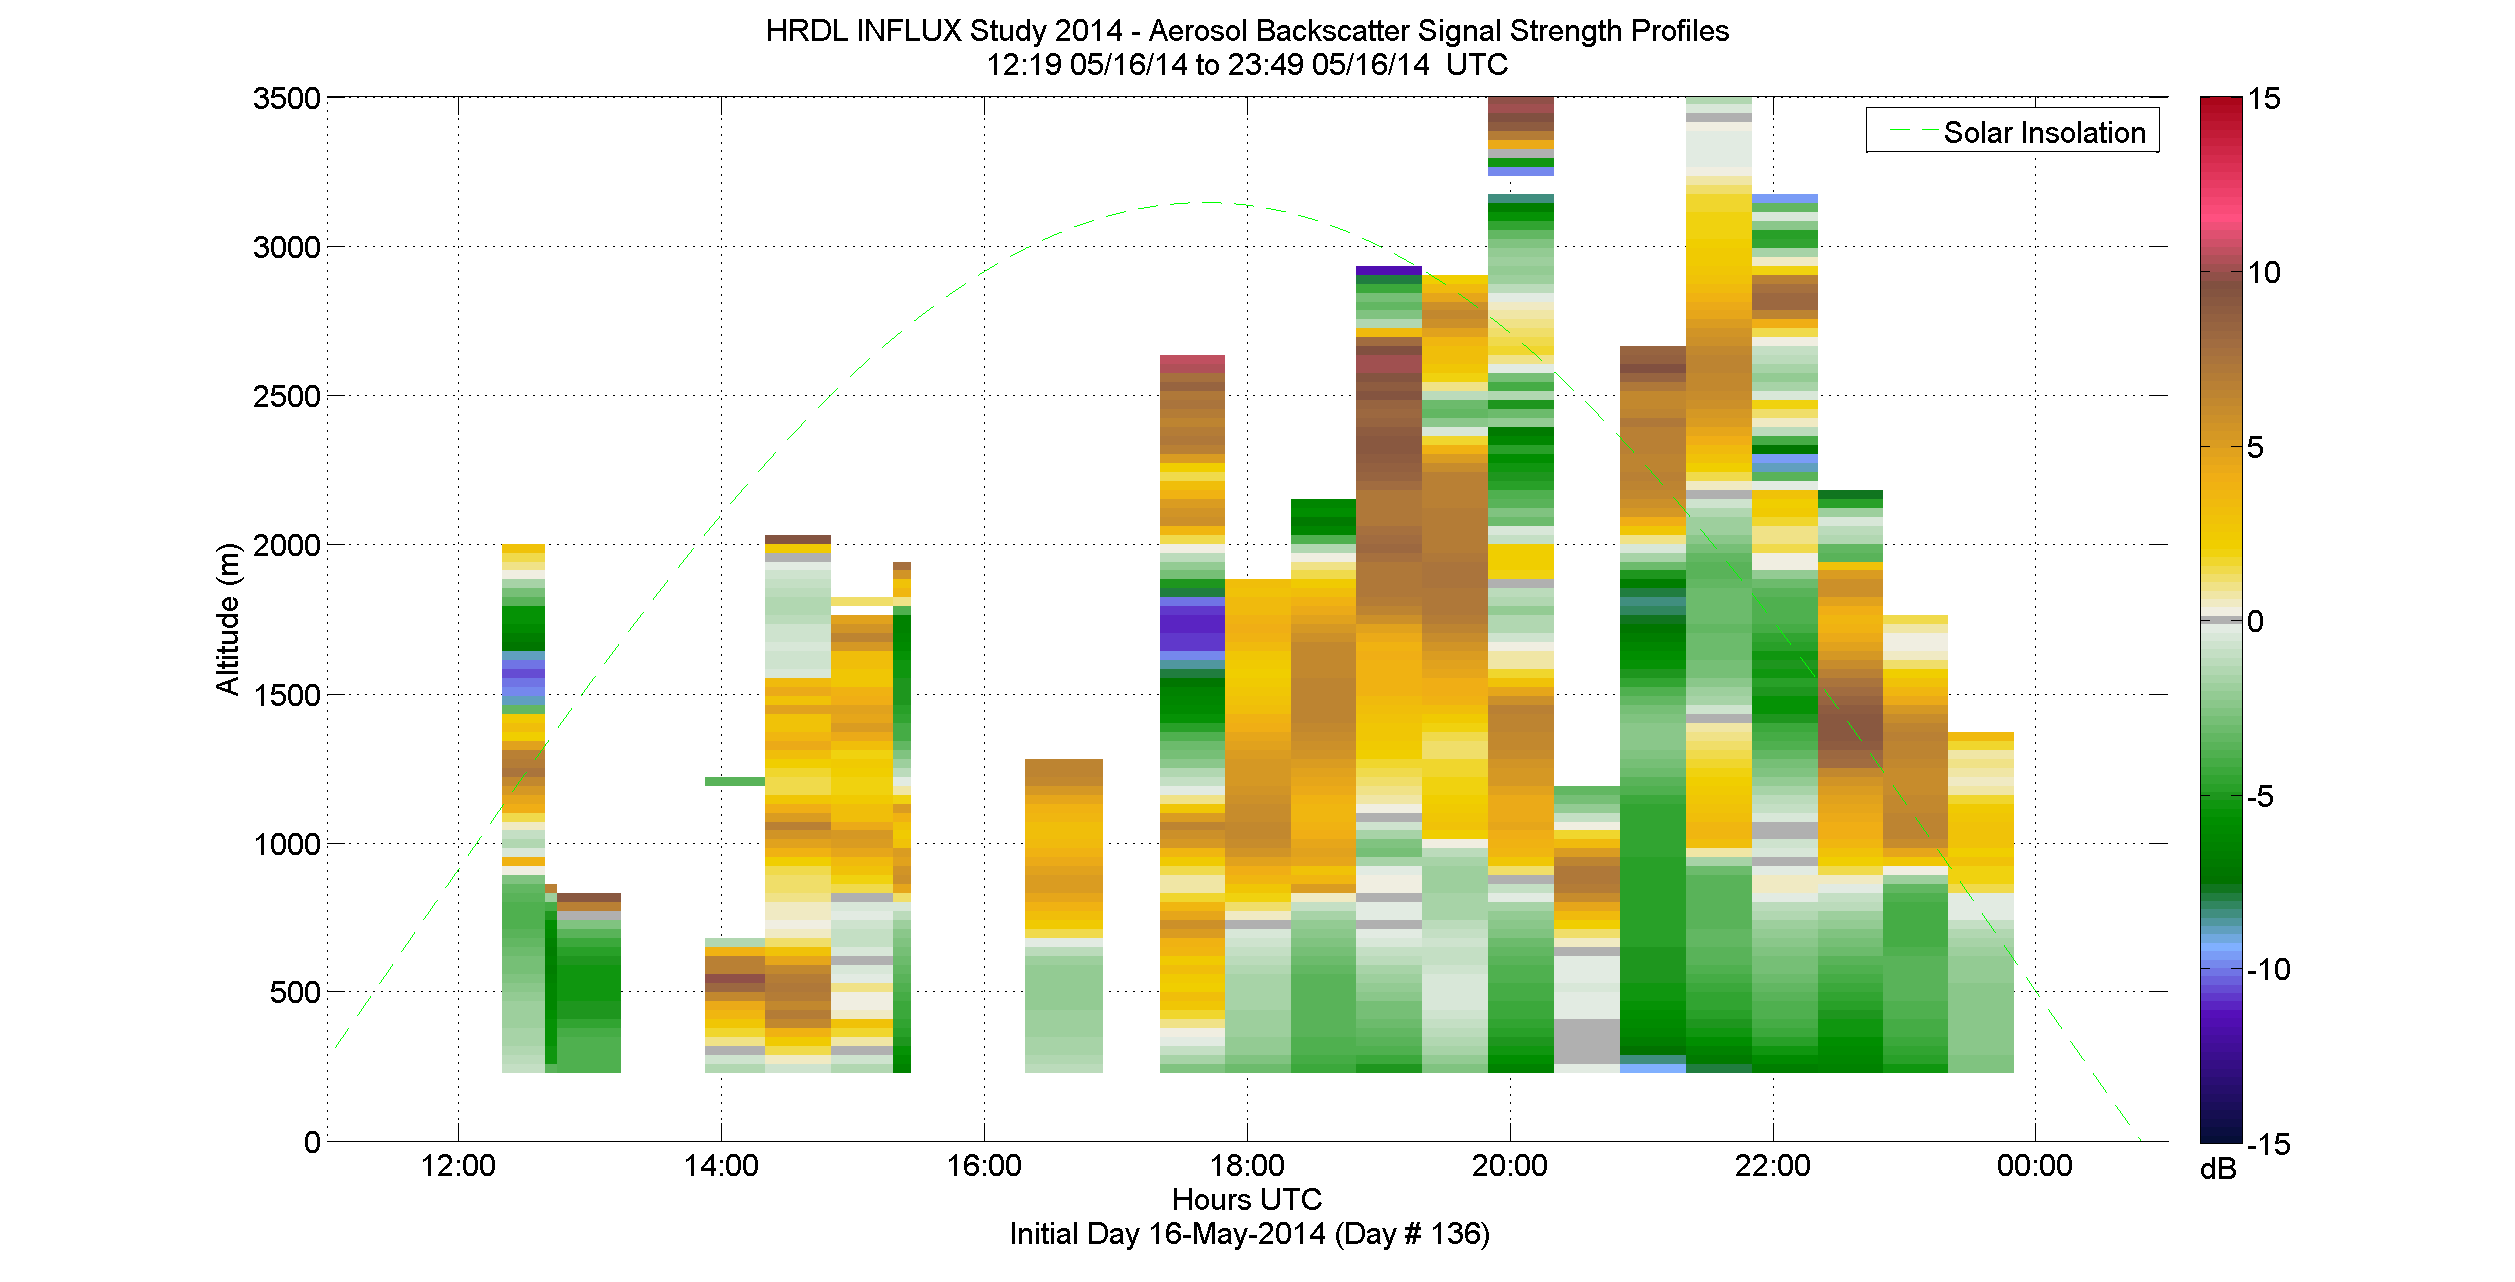 HRDL aerosol backscatter signal strength profile - May 16 pm